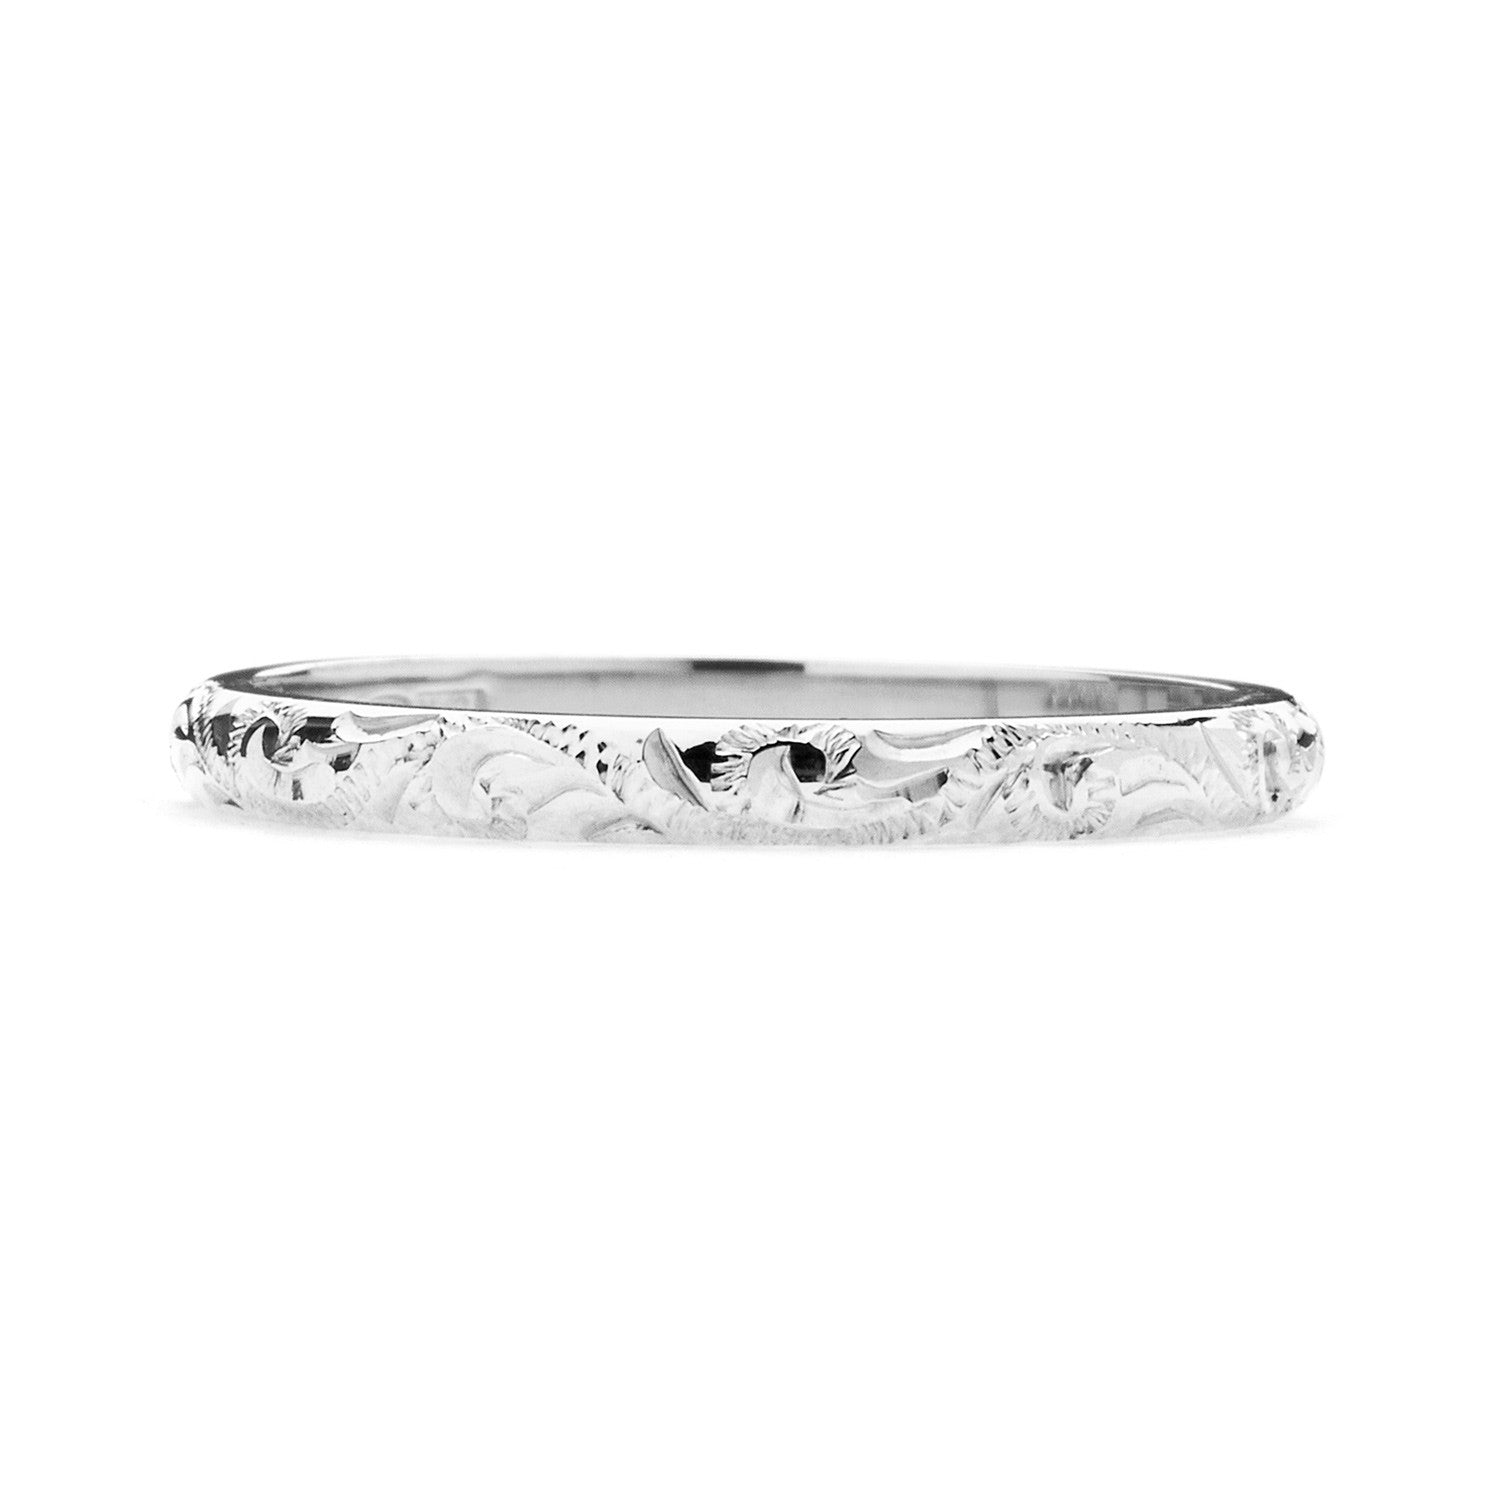 Scrolls Engraved Ethical Platinum Wedding Ring, 2mm